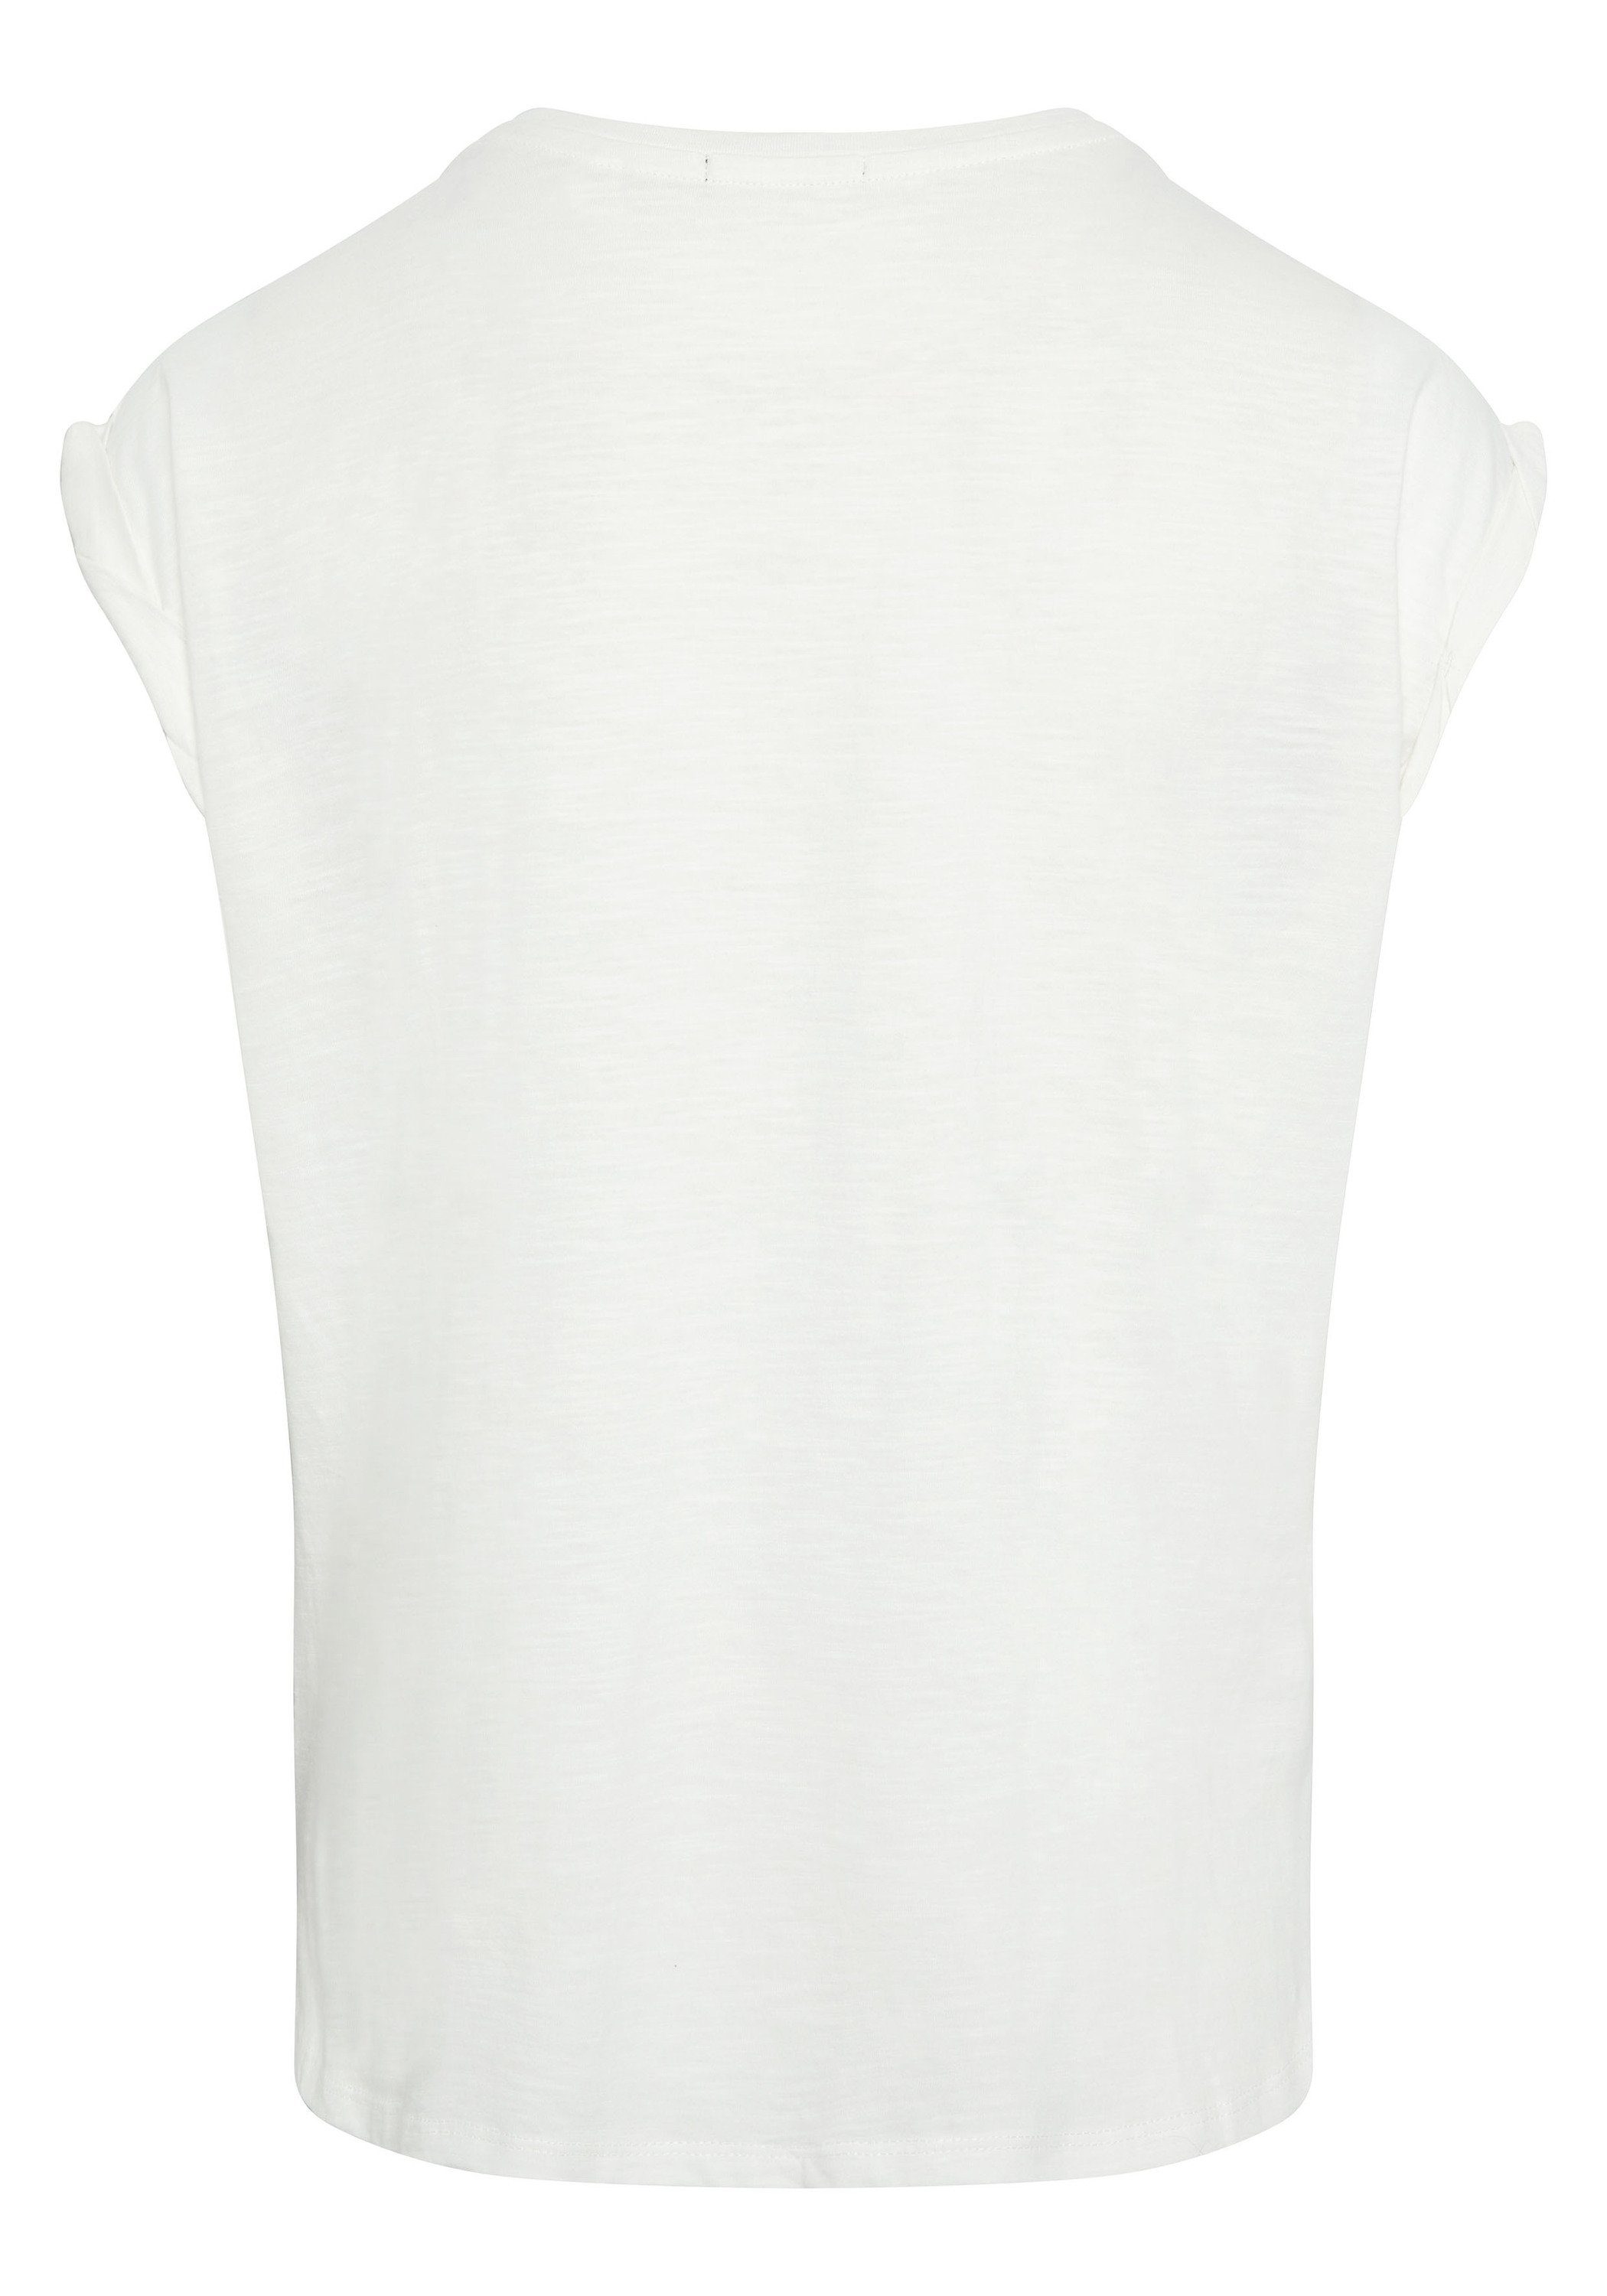 Chiemsee Print-Shirt T-Shirt 1 White Star Fotoprint 11-4202 mit